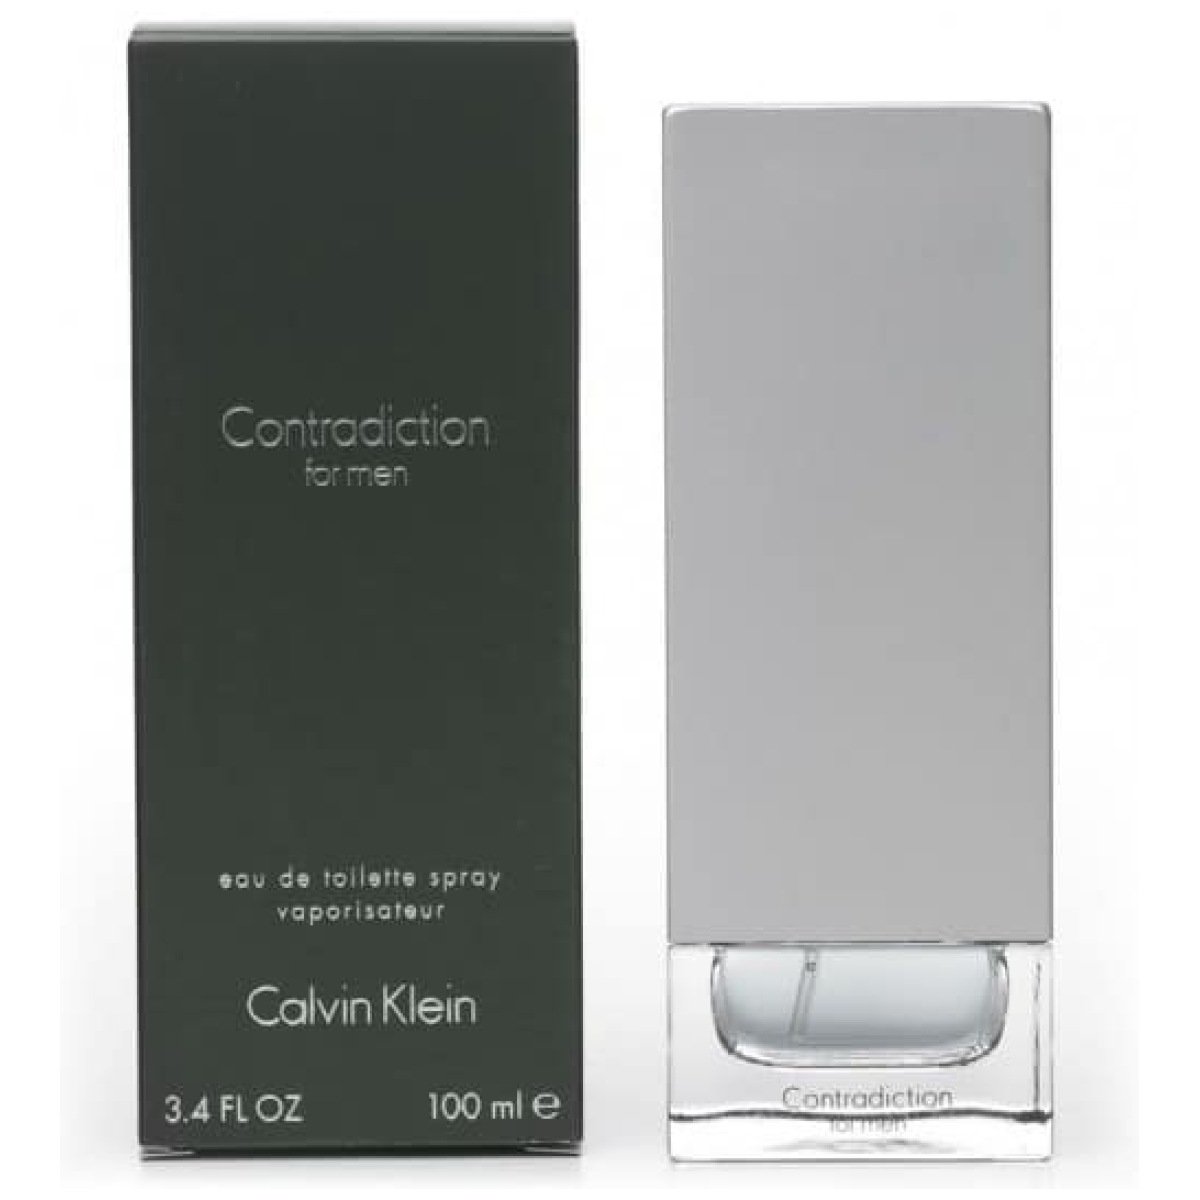 Calvin Klein Contradiction EDT Perfume For Men 100ml